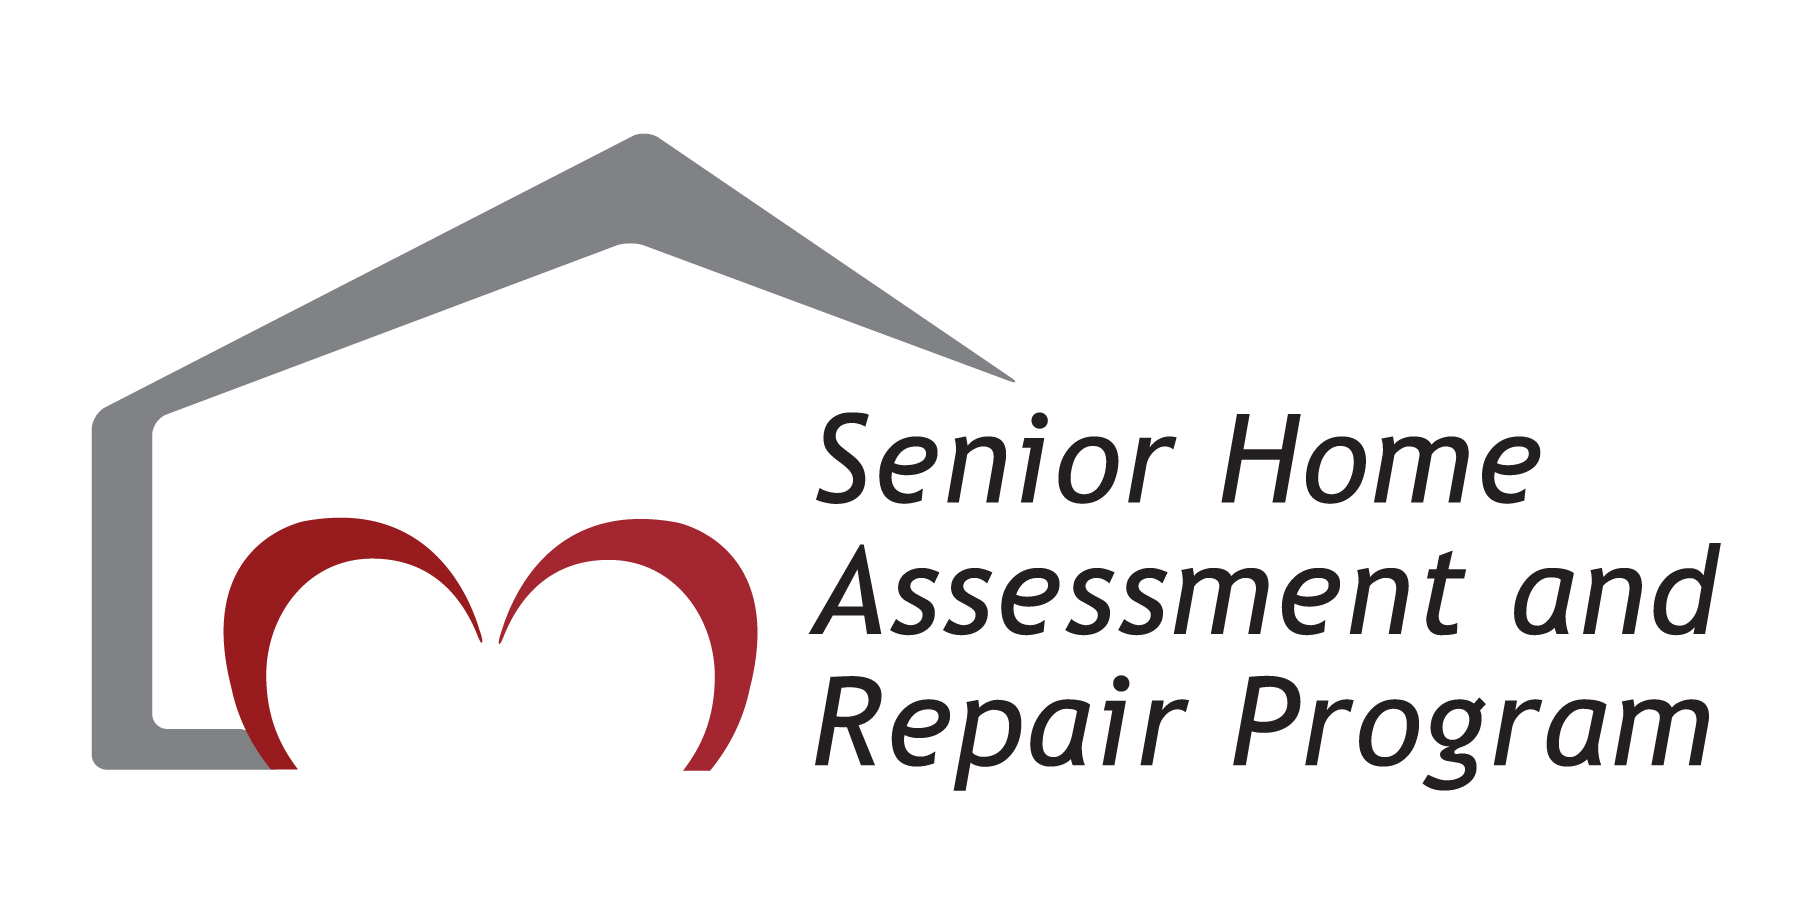 Senior Home Assessment and Repair Program logo (large)